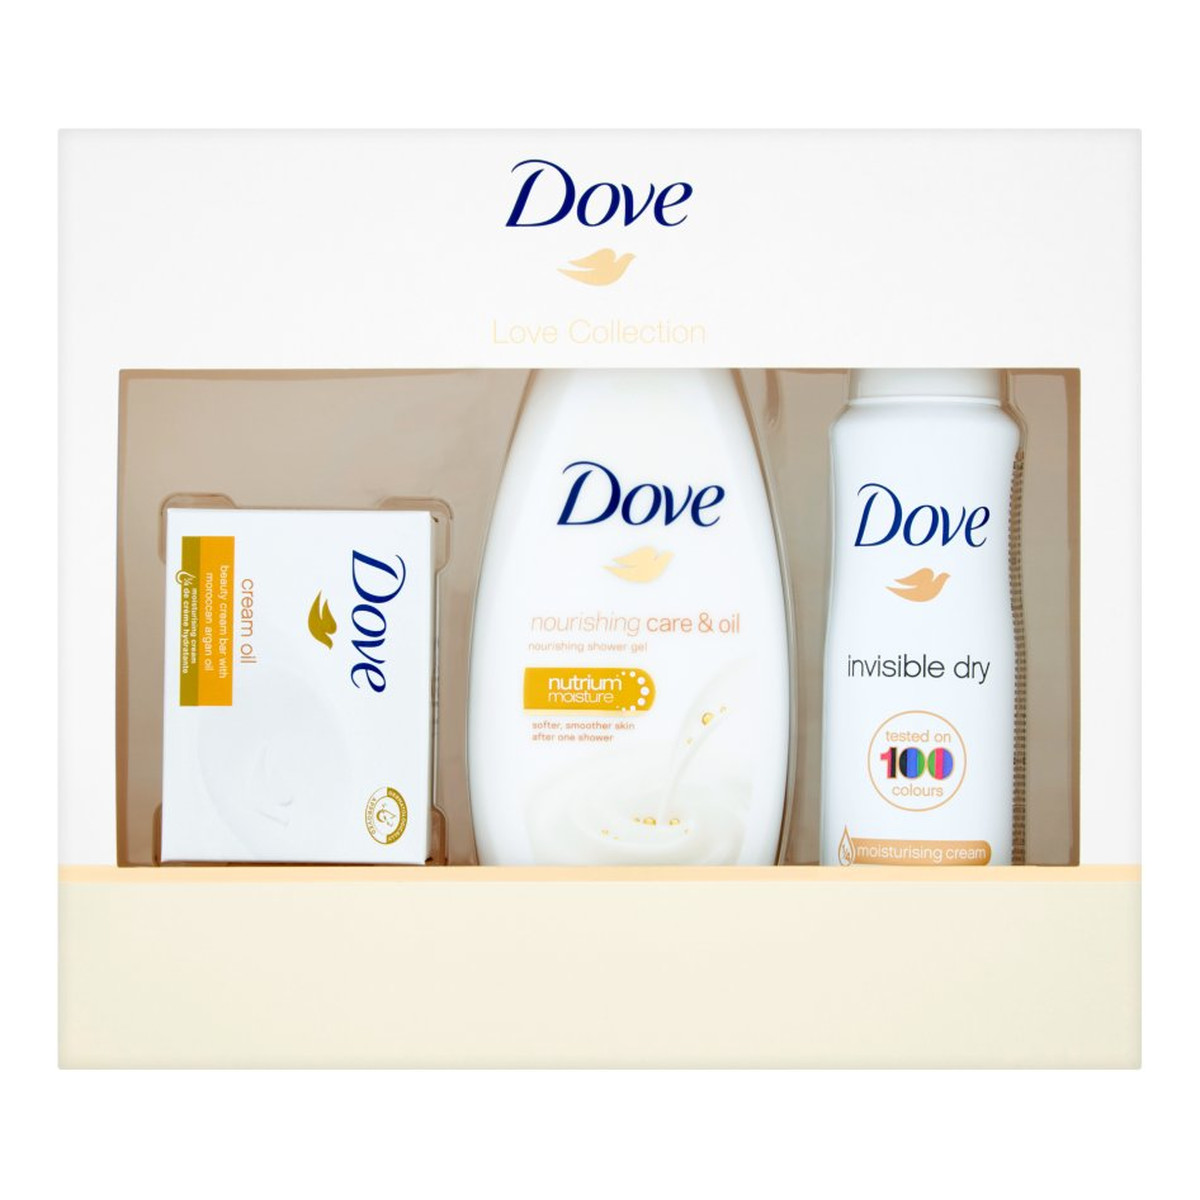 Dove Love Collection Zestaw kosmetyków